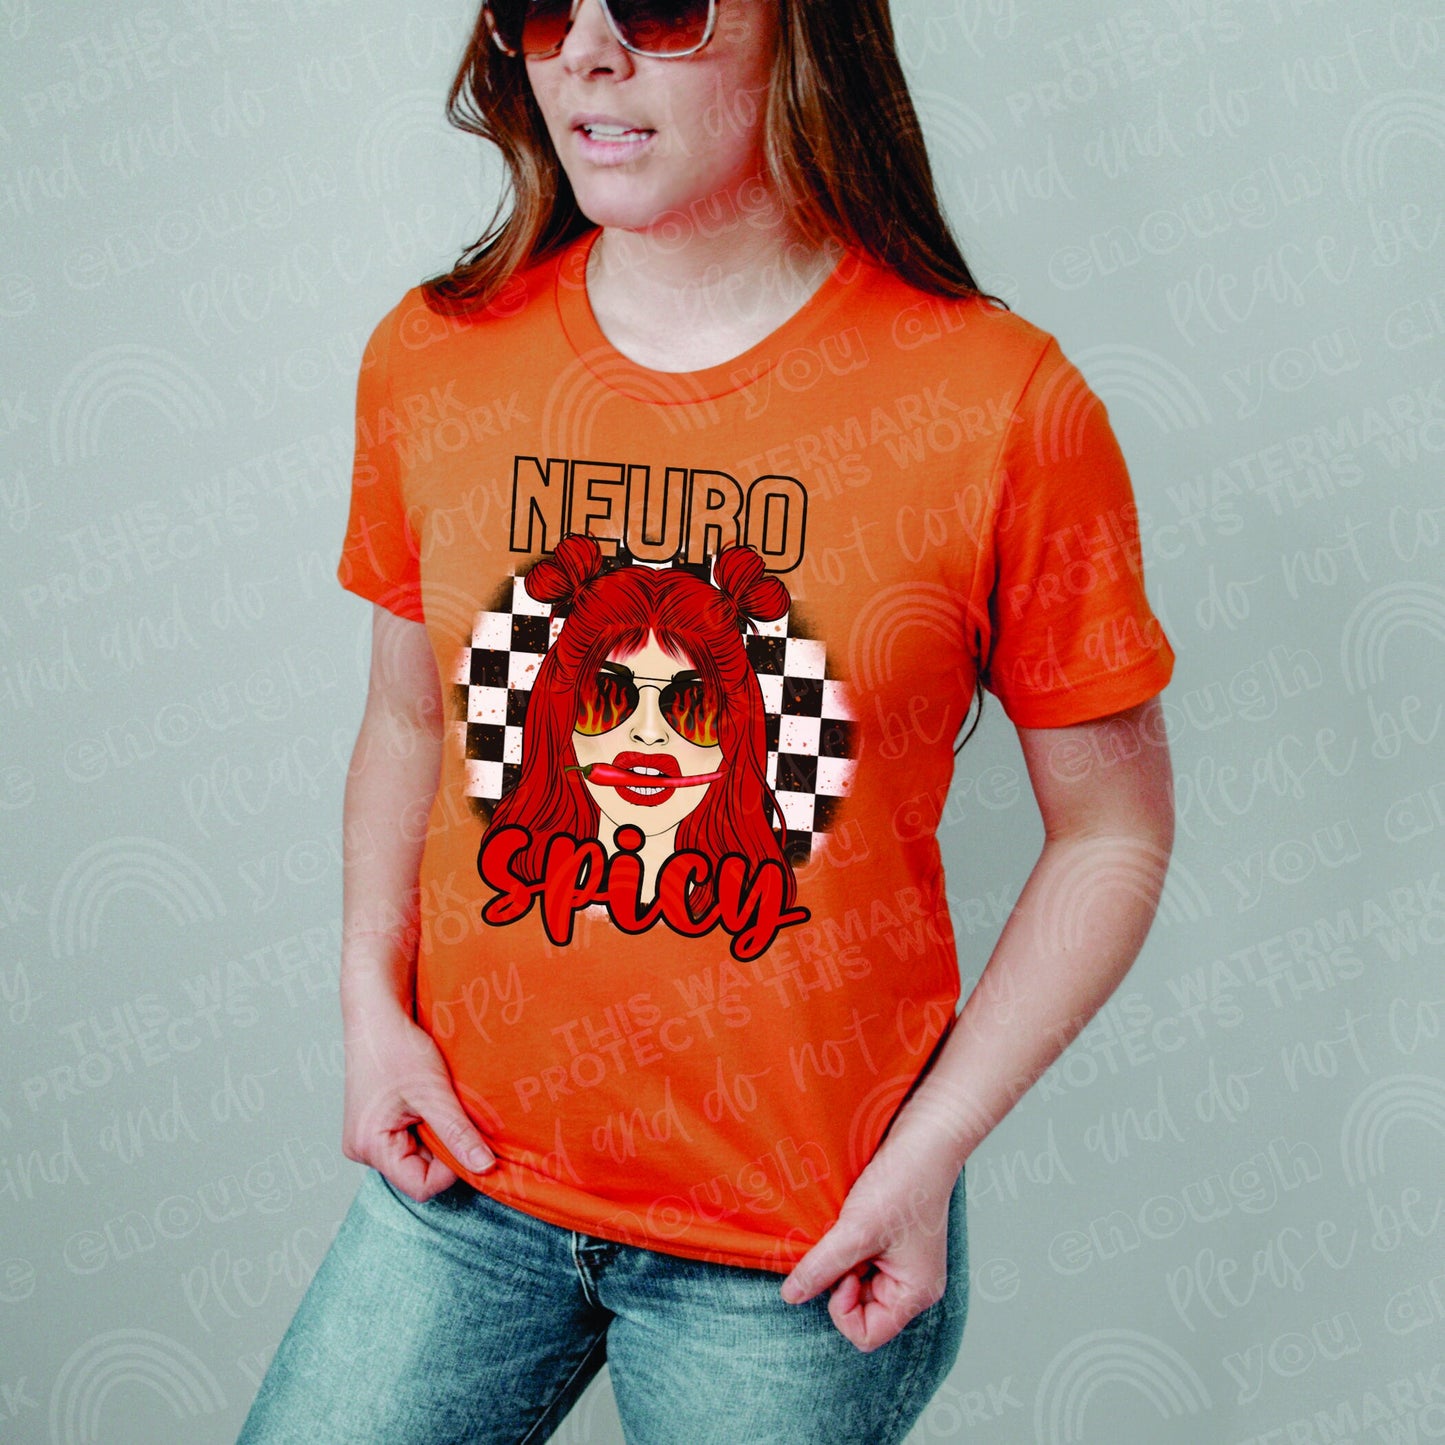 Neurospicy t-shirt - Autism Acceptance - Autism Awareness Shirt - ADHD T-Shirt